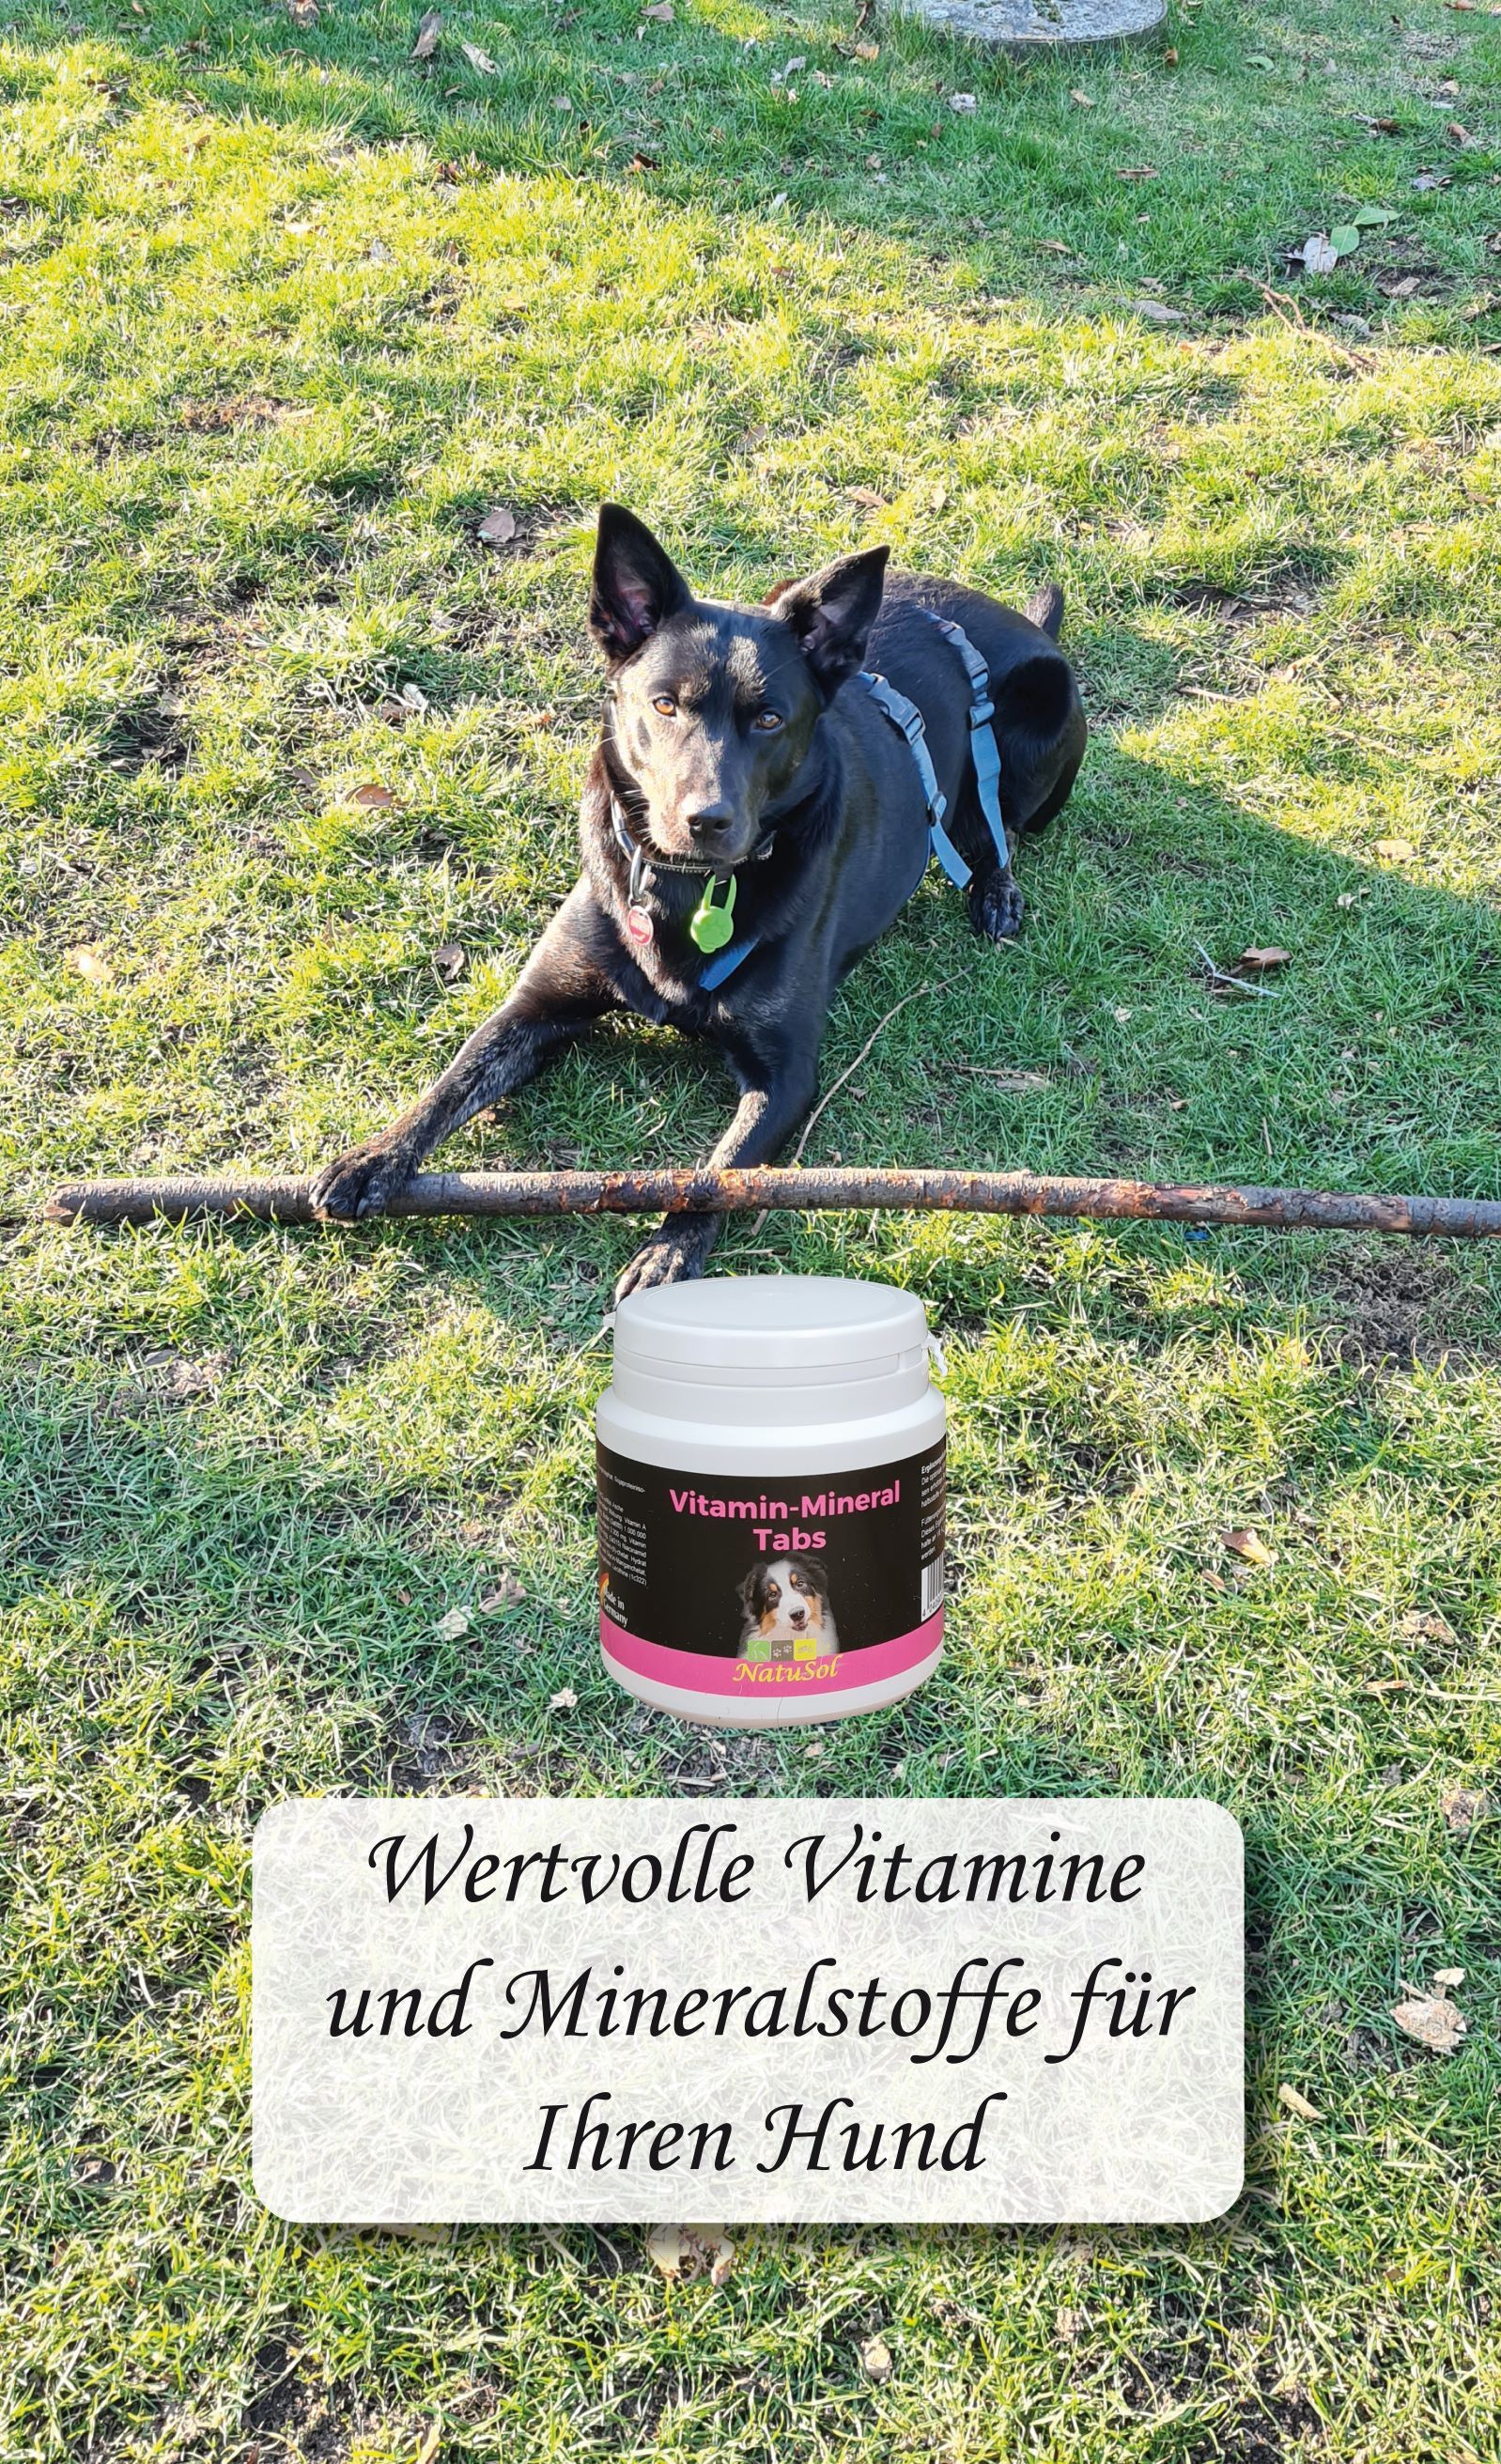 NatuSol Vitamin-Mineral Tabs für Hunde - optimale Vitaminversorgung